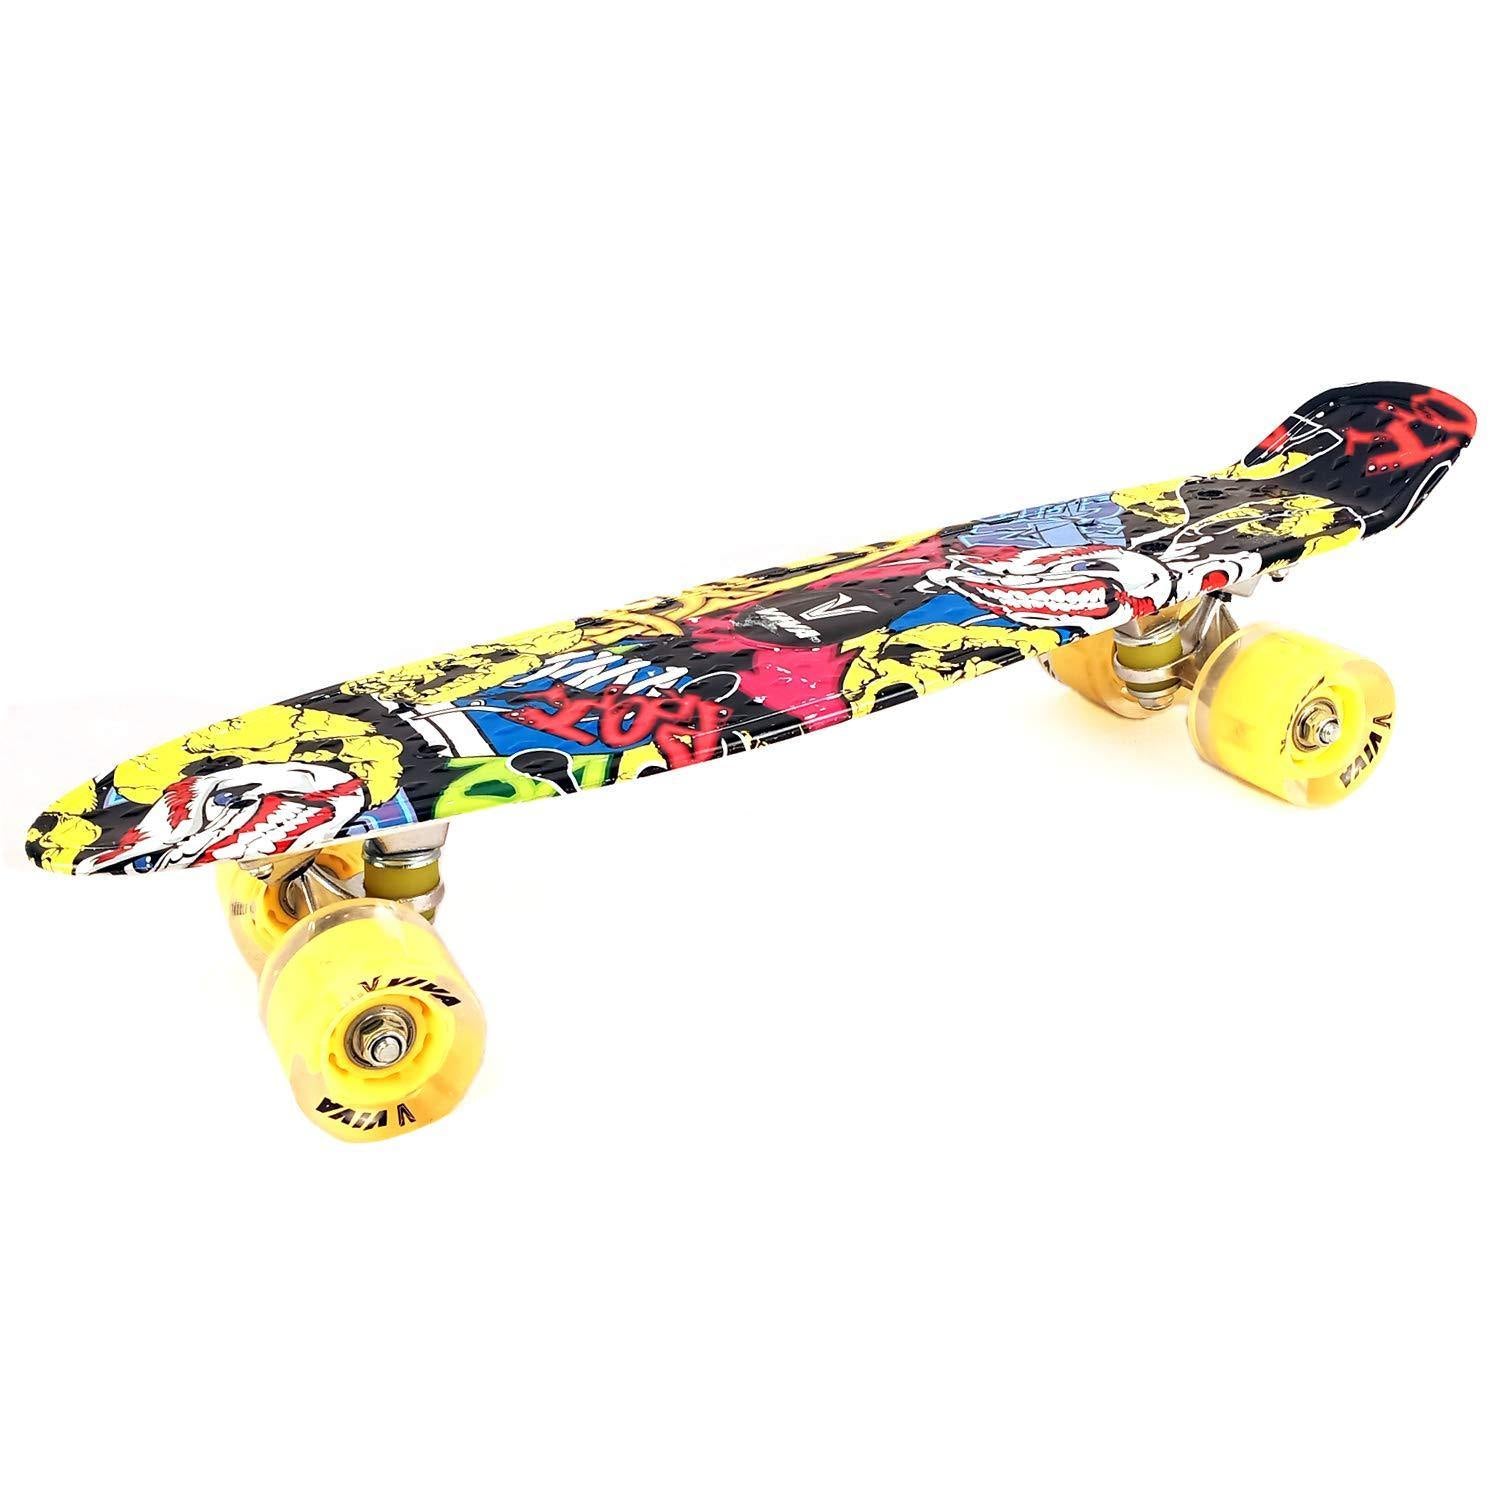 Viva Skateboard with Flashlight Wheels - Junior (22 x 6 Inches) - Best Price online Prokicksports.com